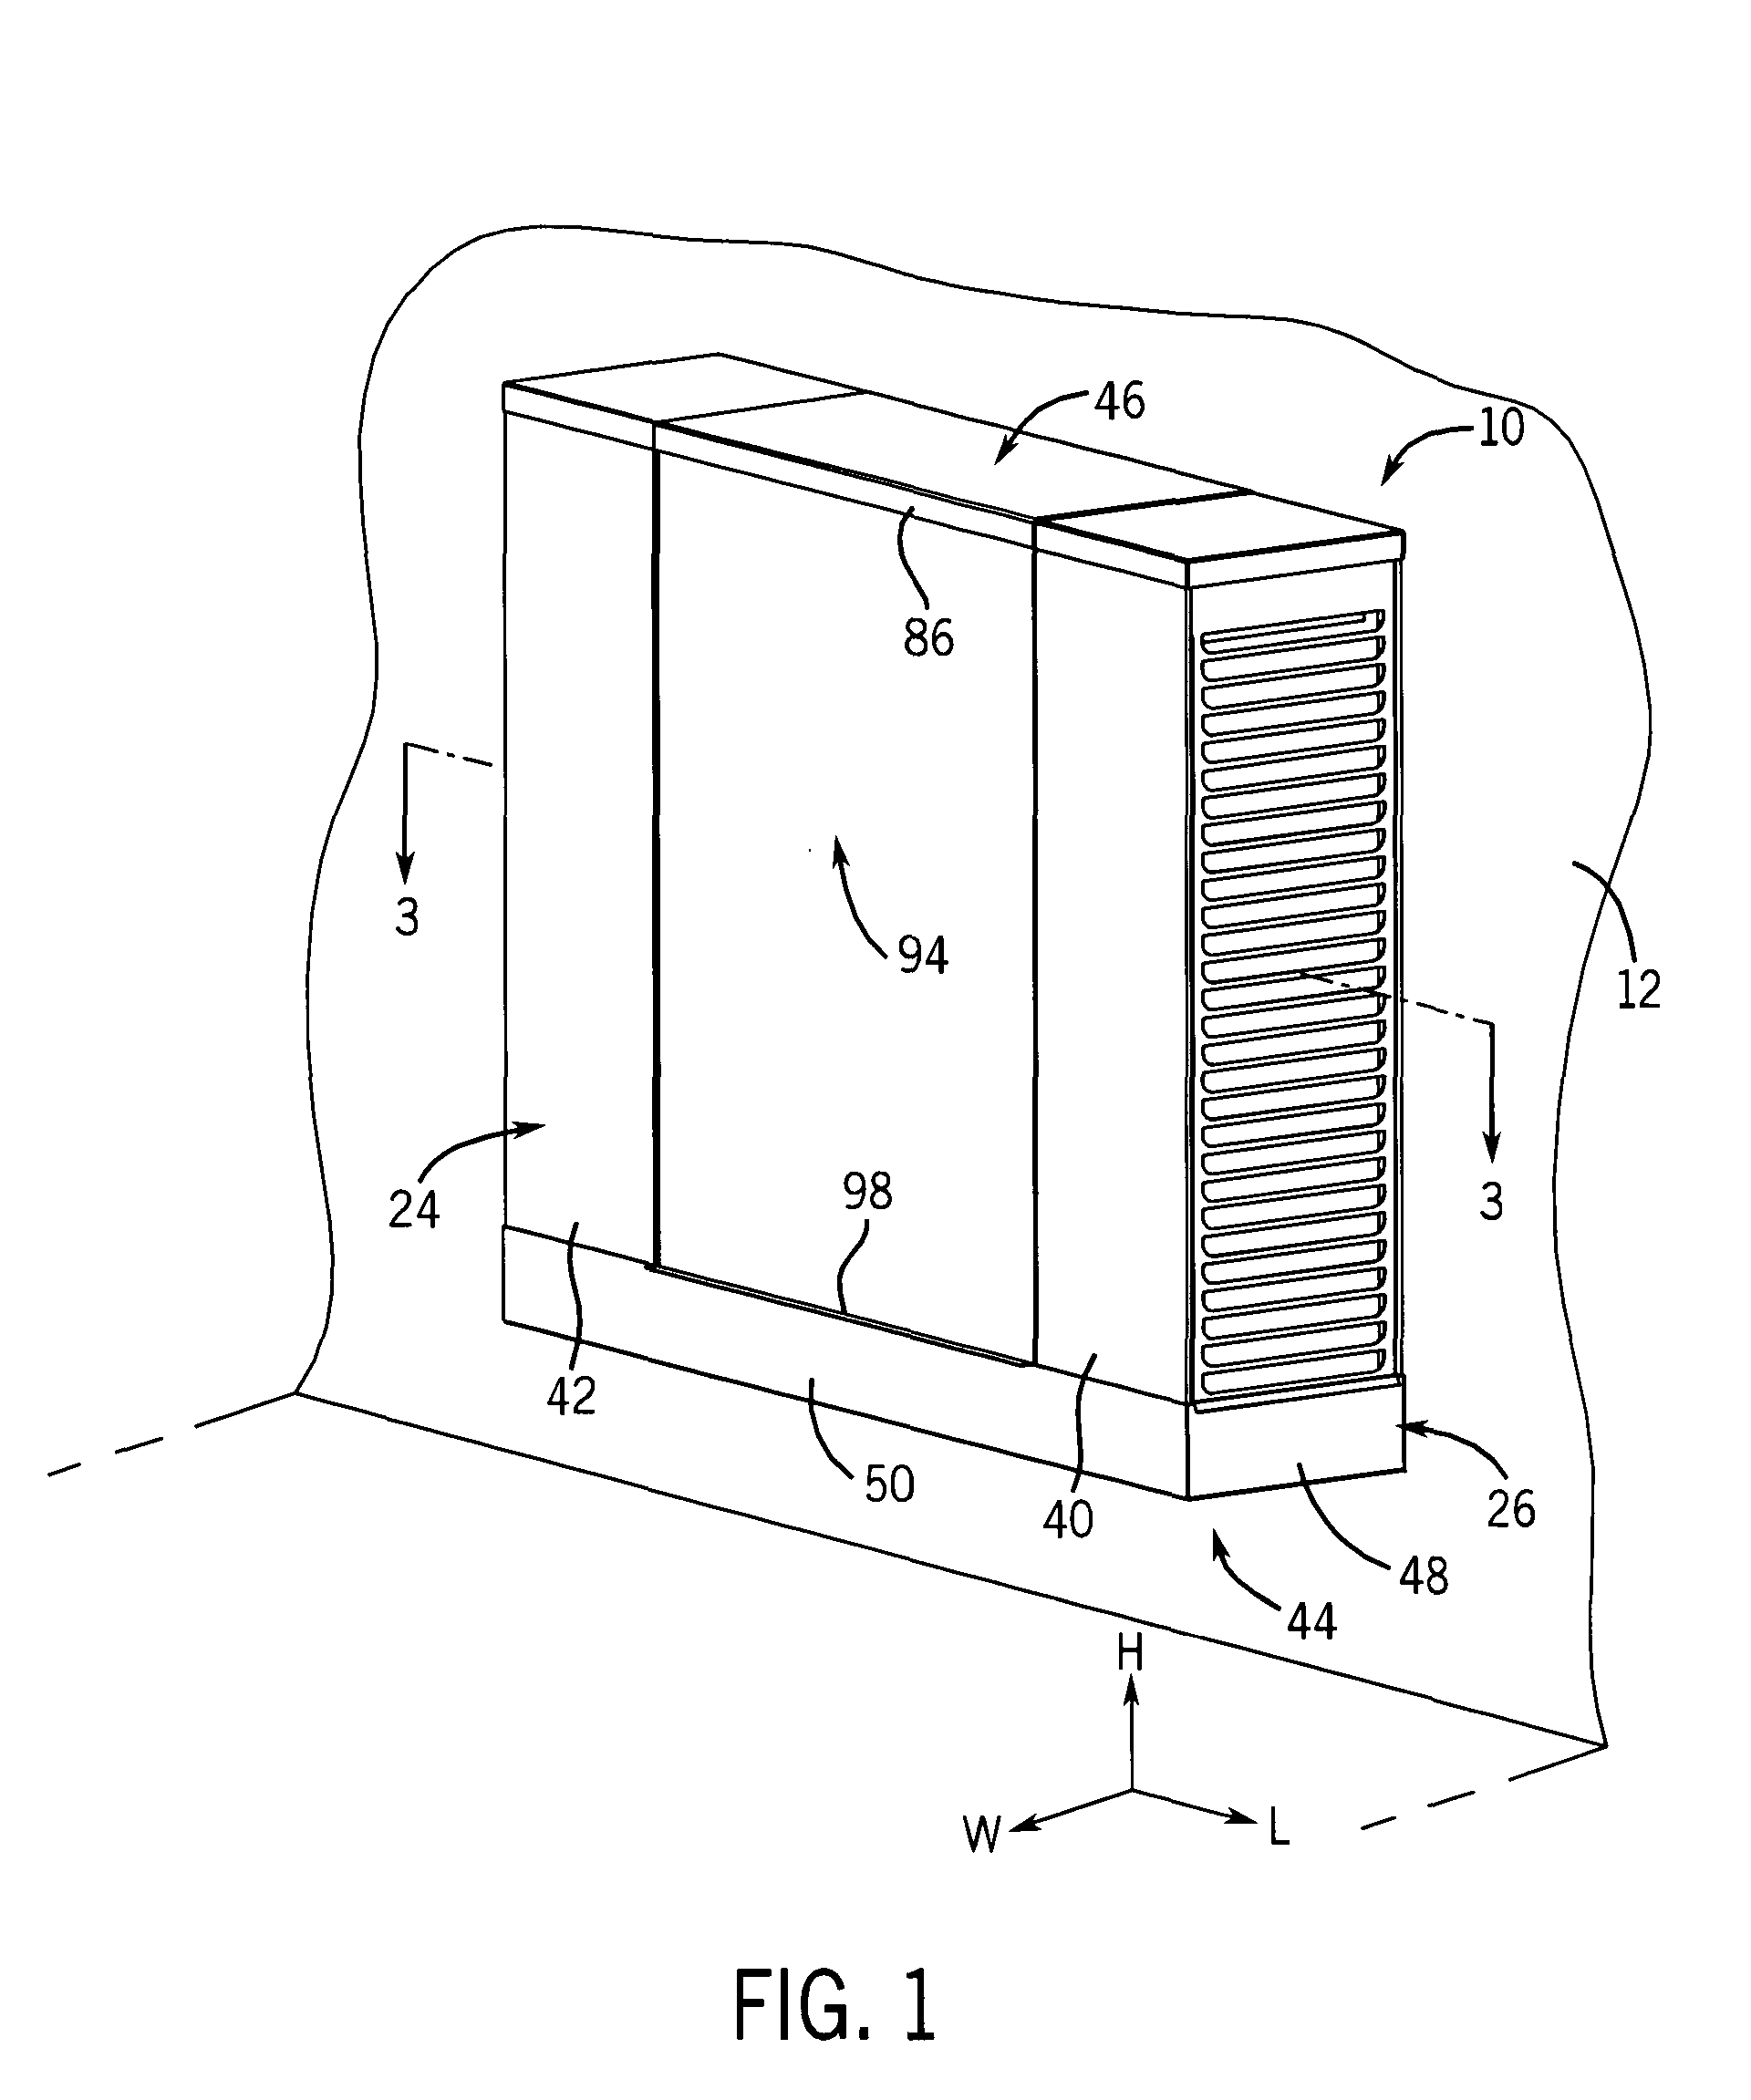 Low profile evaporative cooler housing